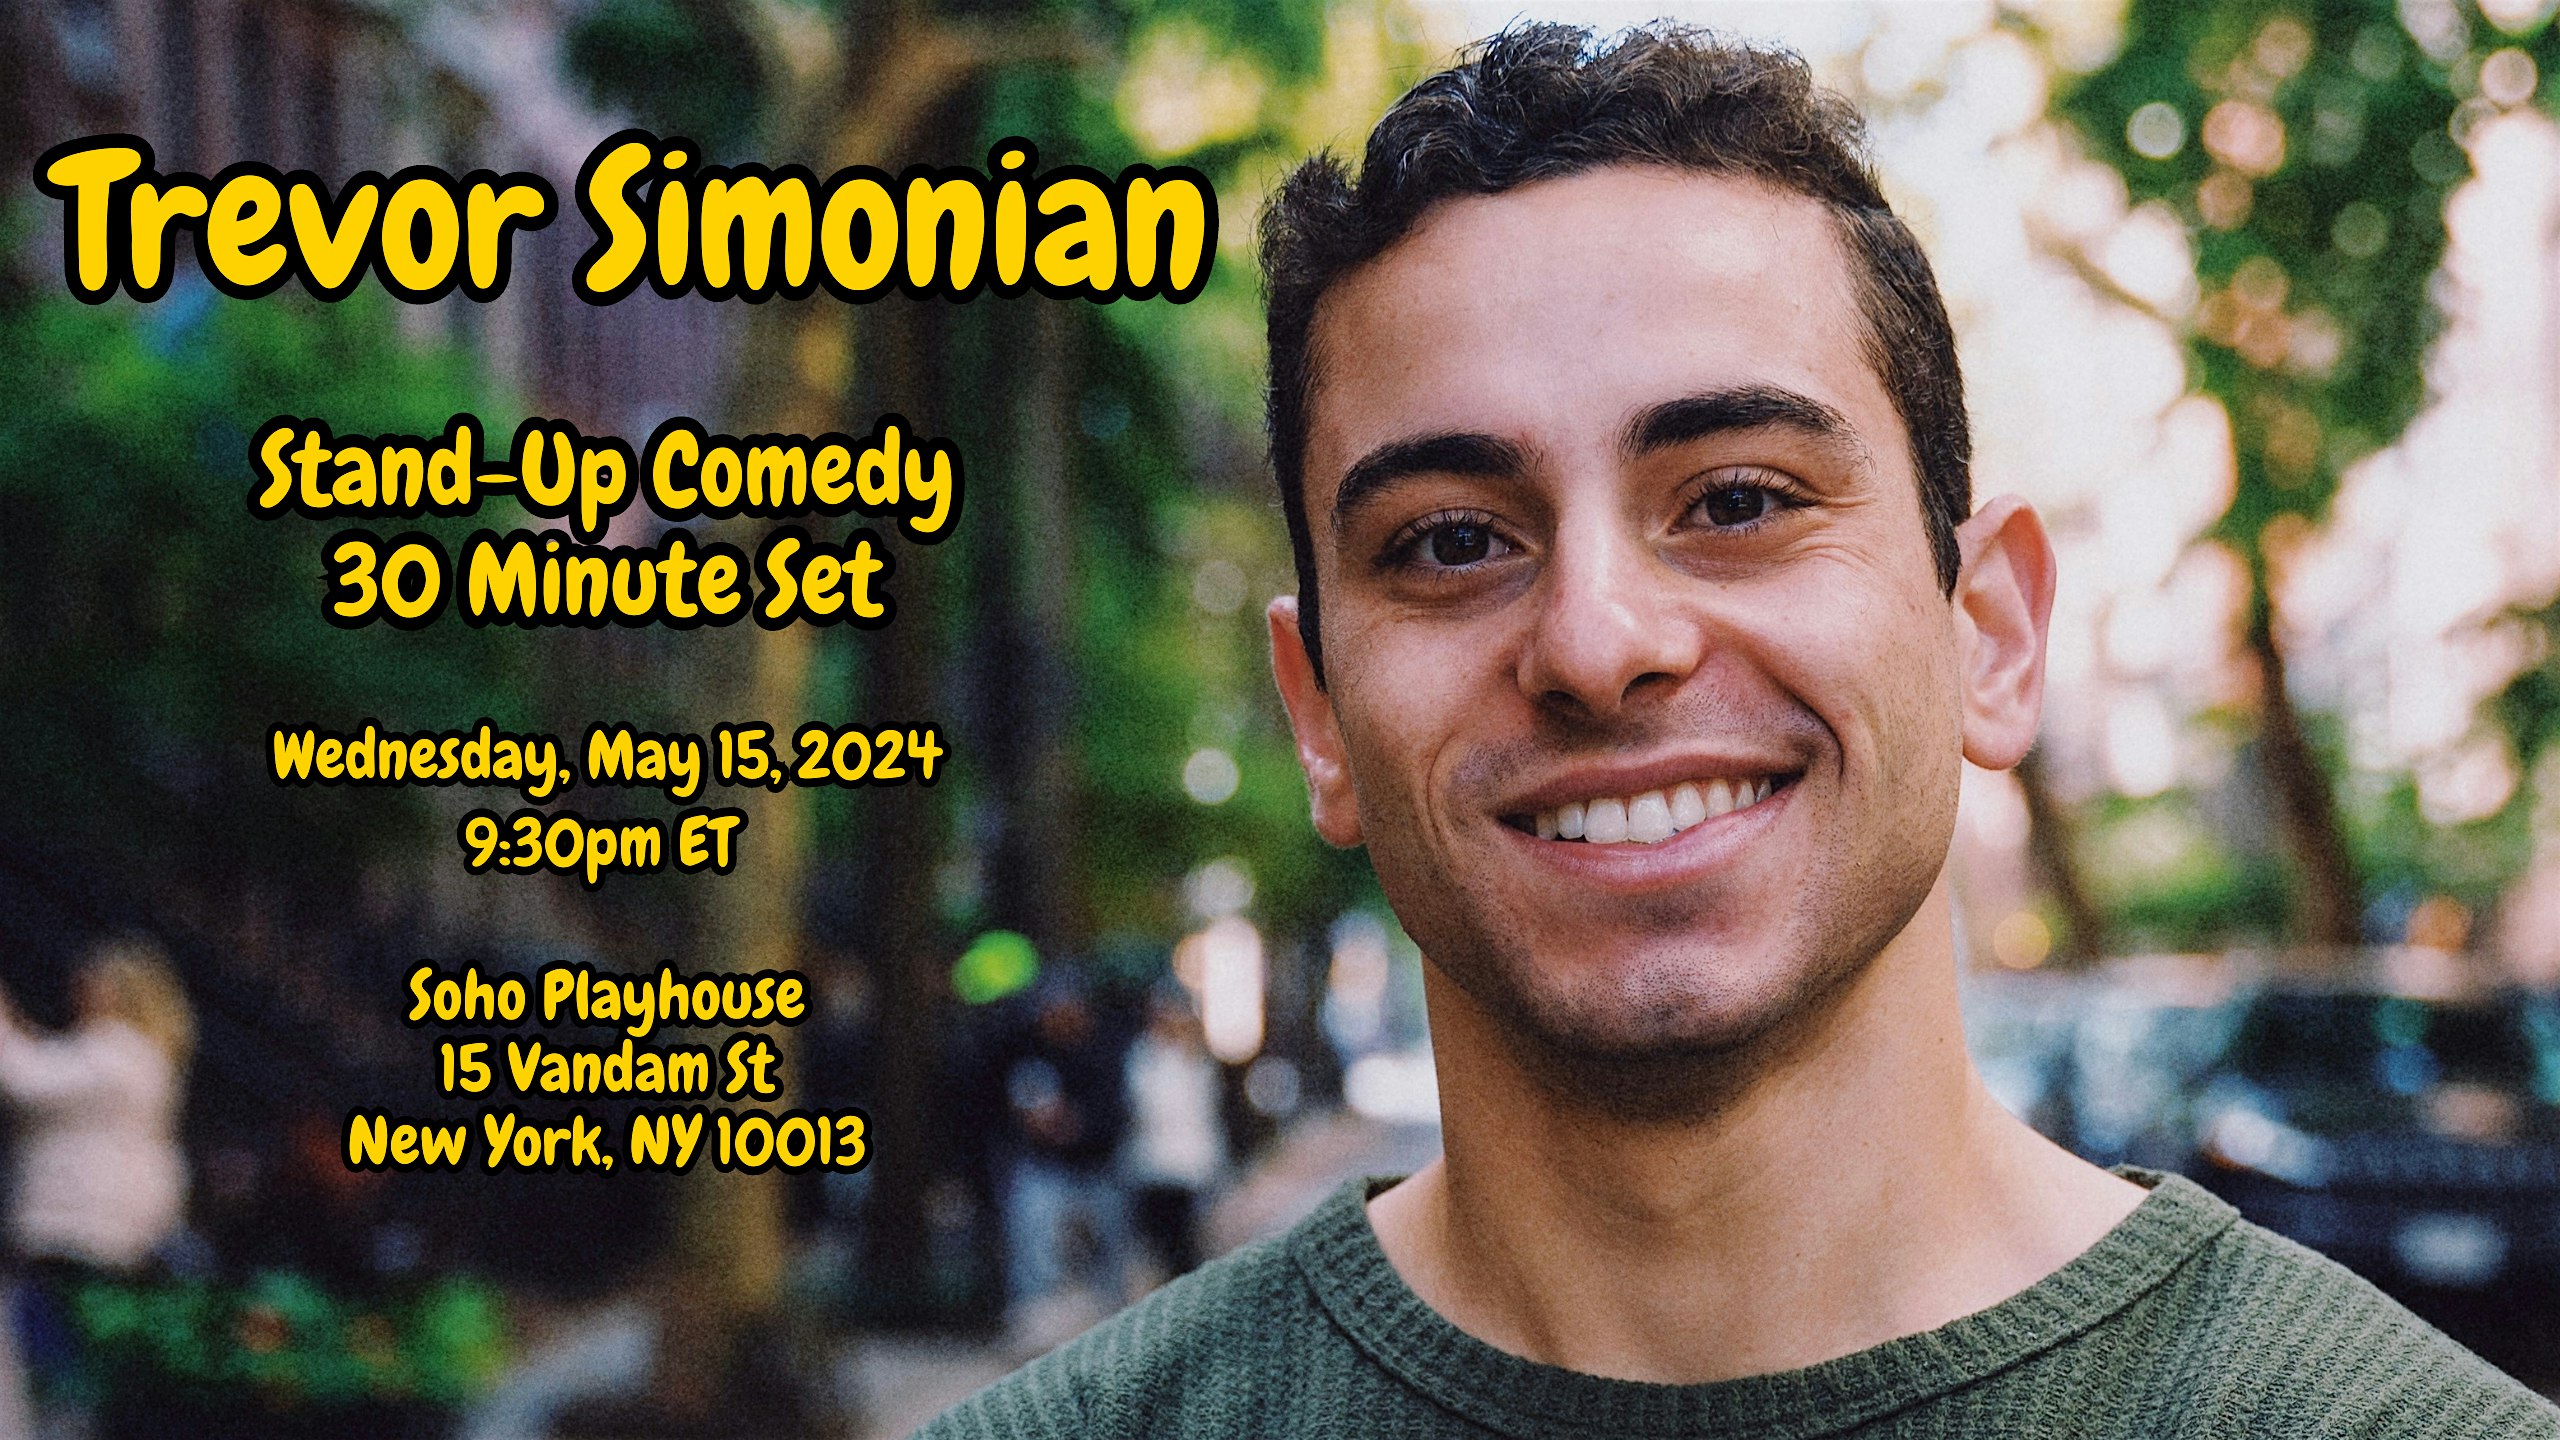 Trevor Simonian | Stand-Up Comedy Headlining Show